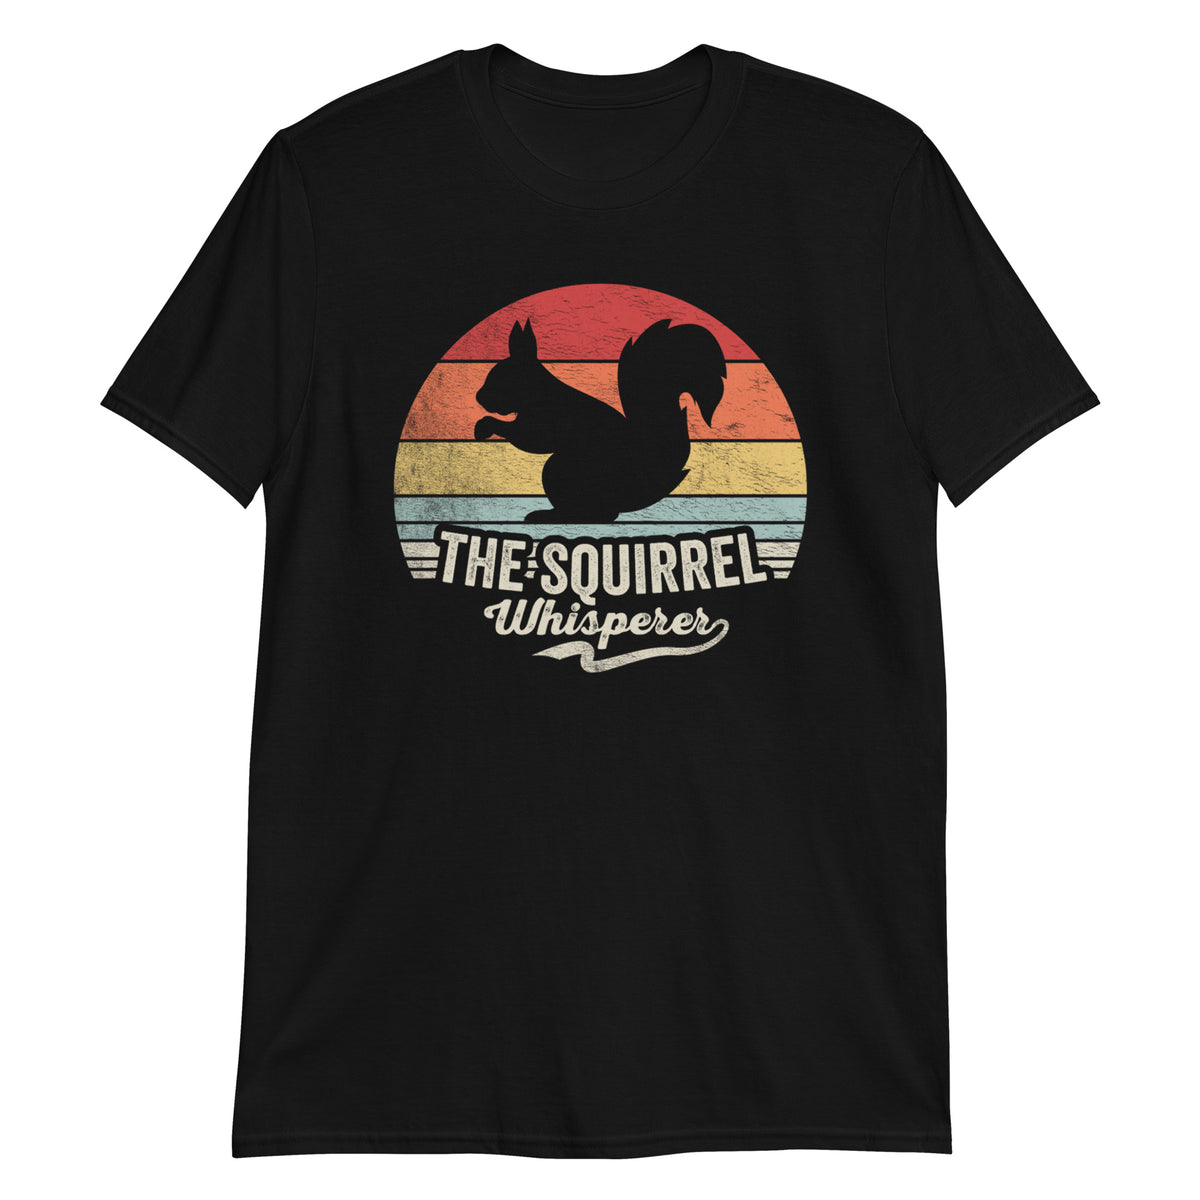 Retro Vintage Squirrel Lover Squirrel Whisperer T-Shirt